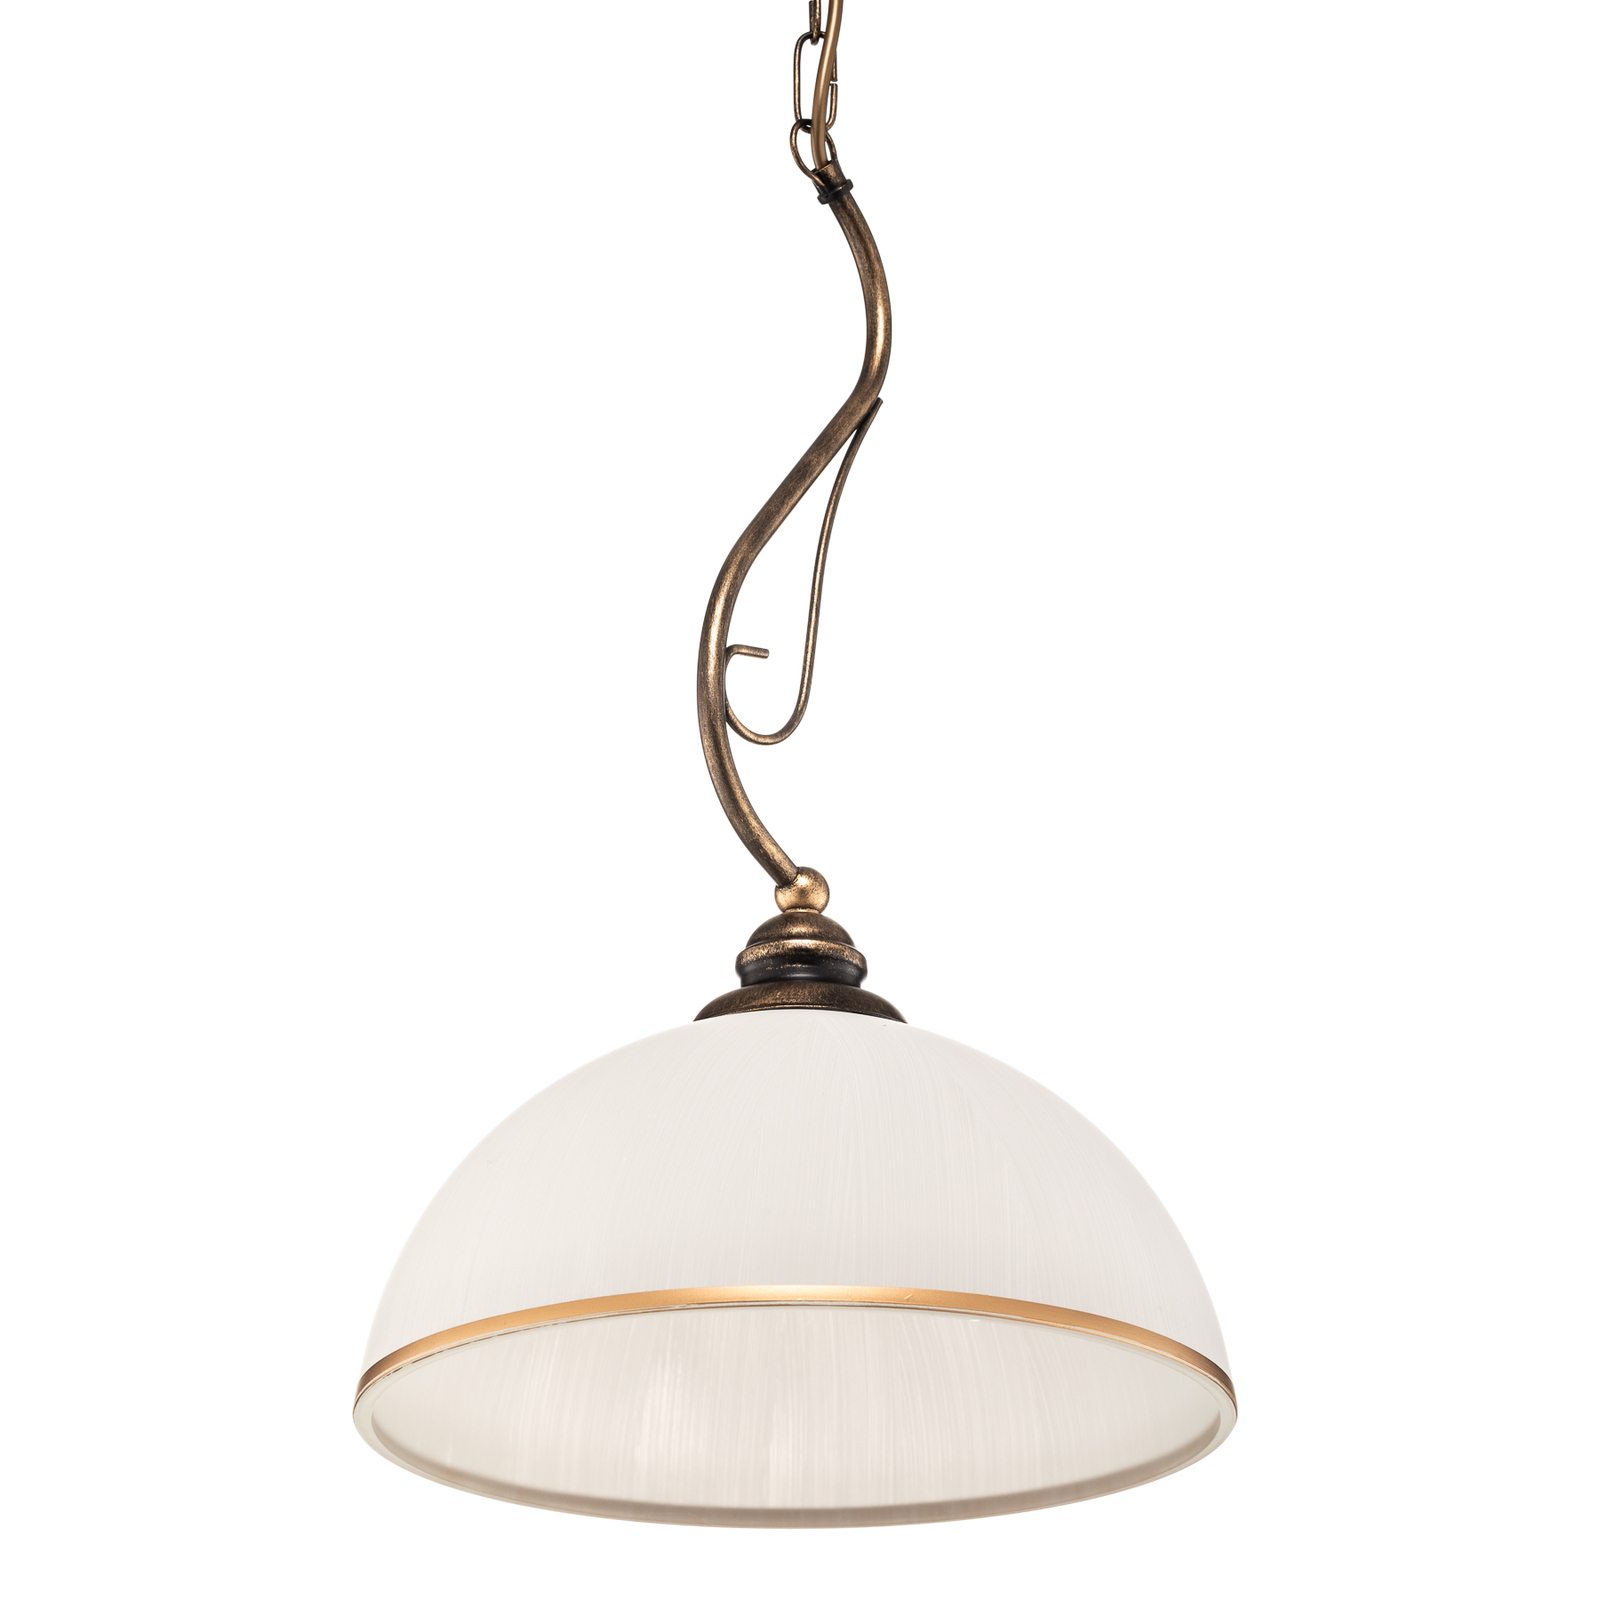 Casale hanging light, one-bulb